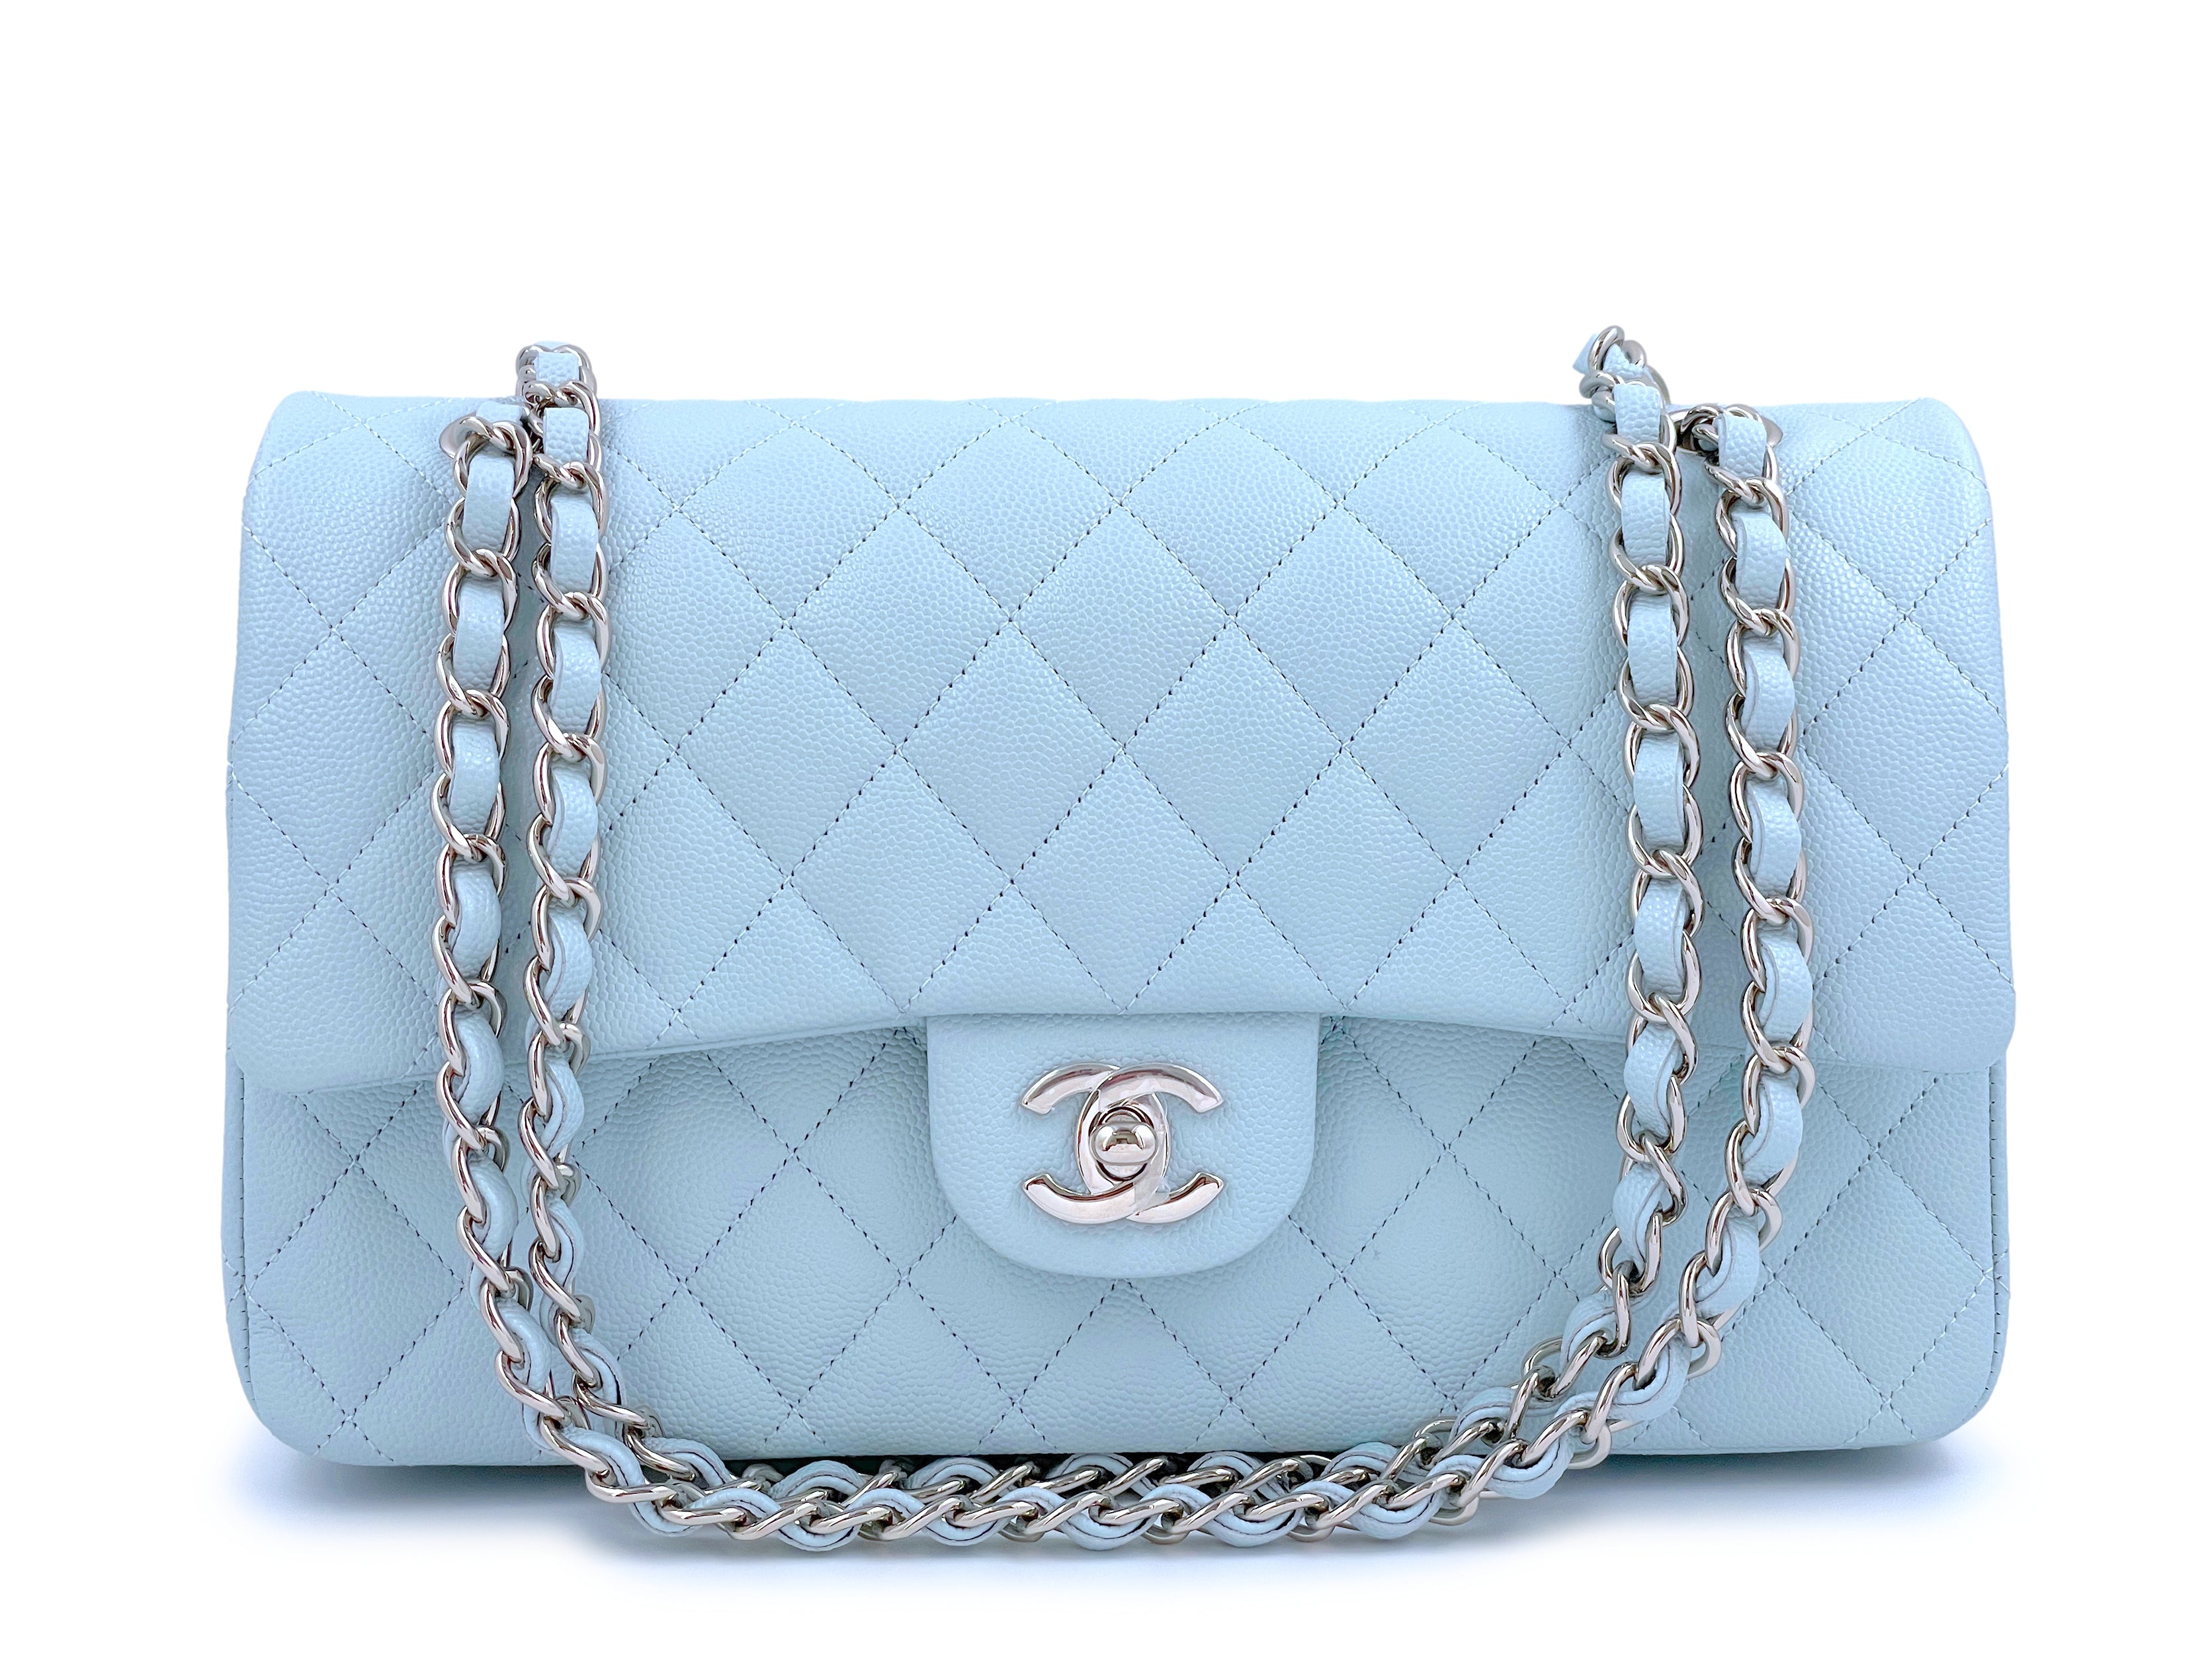 Chanel Classic 11.12 Handbag